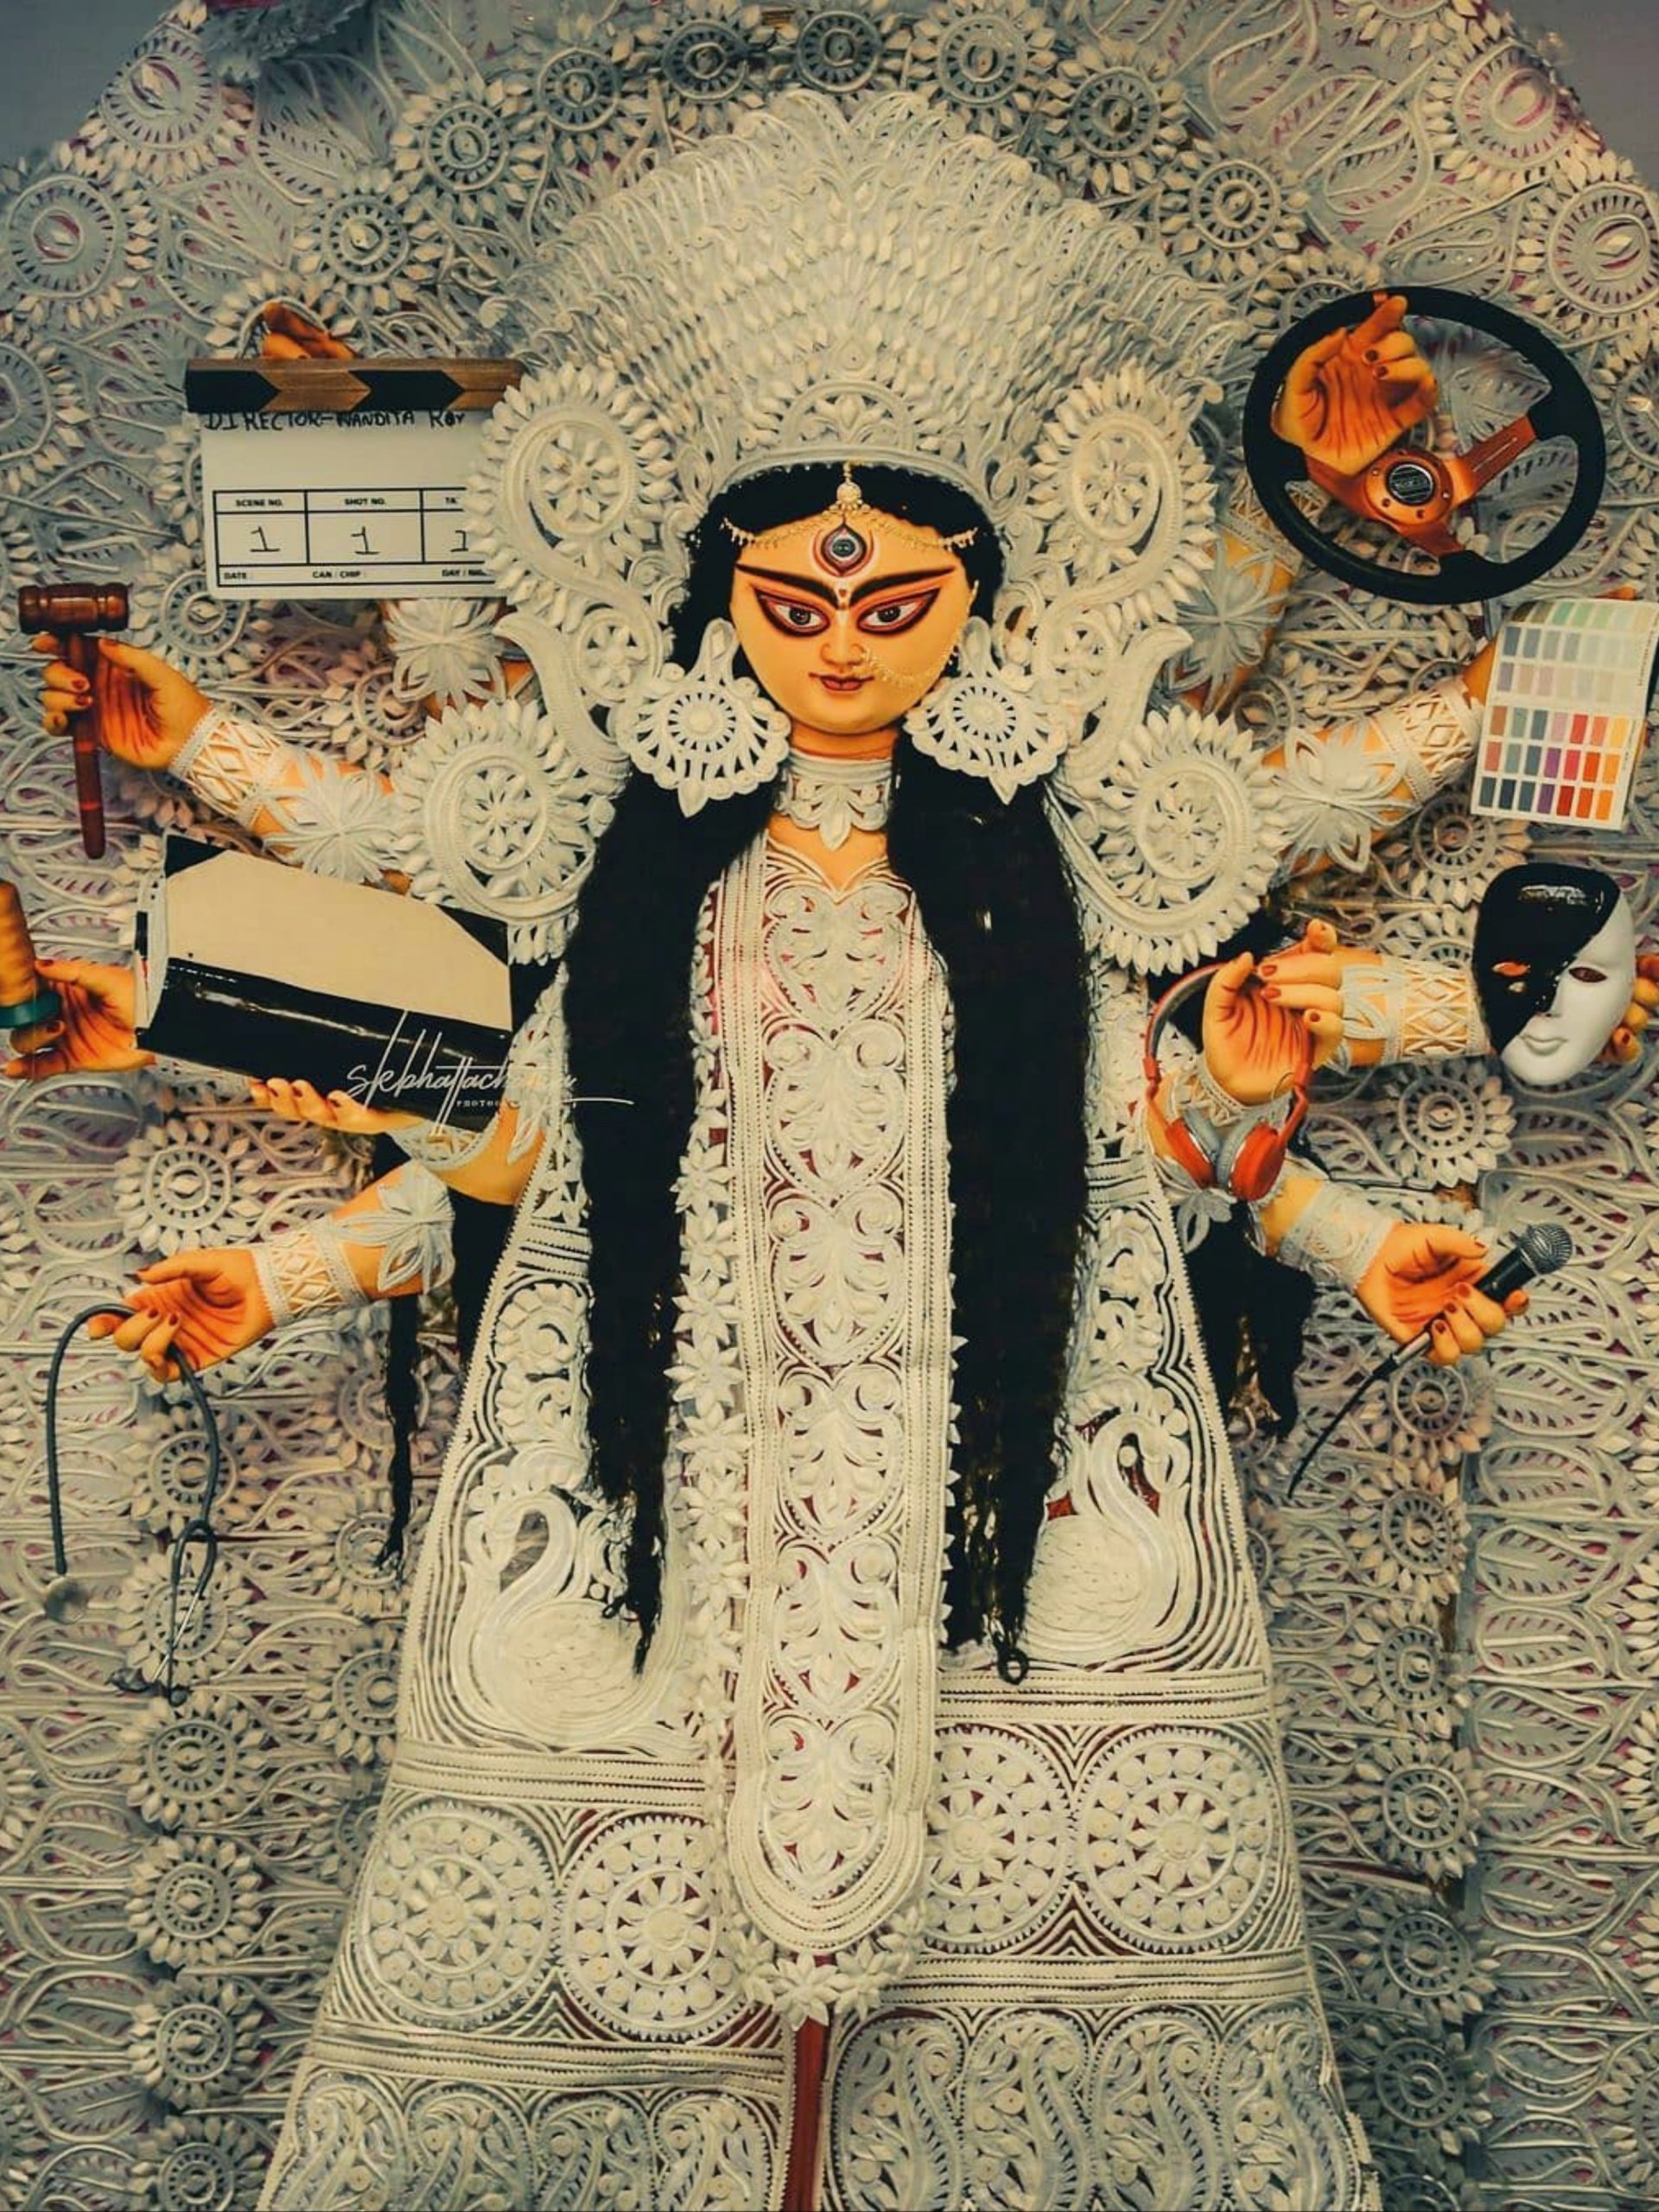 Goddess Durga idol